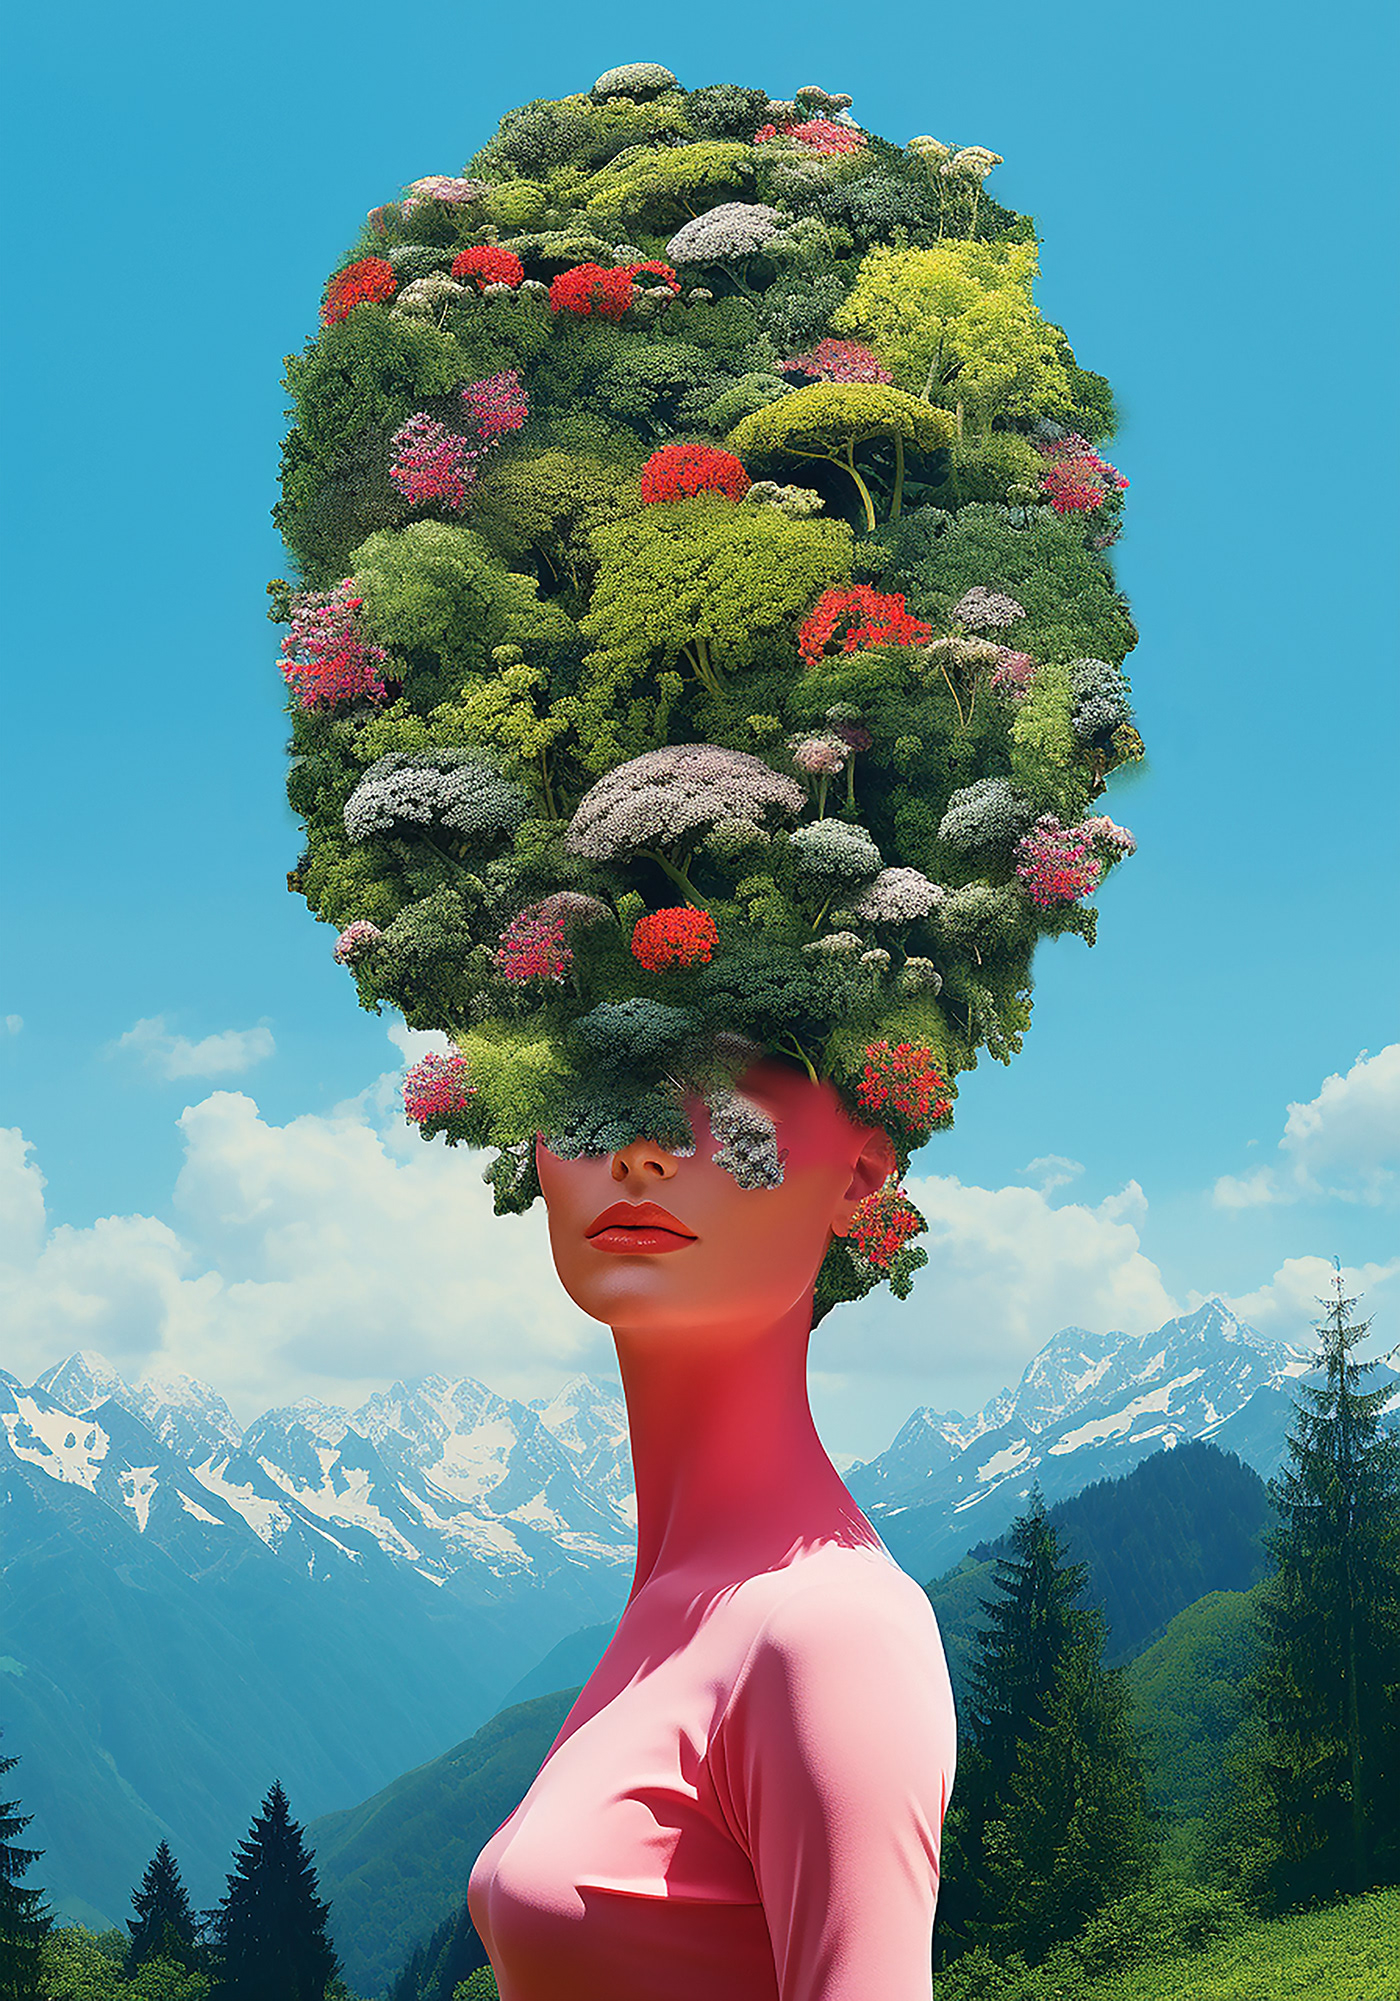 Vladimir Shmoylov's posters for the Calanca Biennale 2025 “Tree and Me”. Switzerland